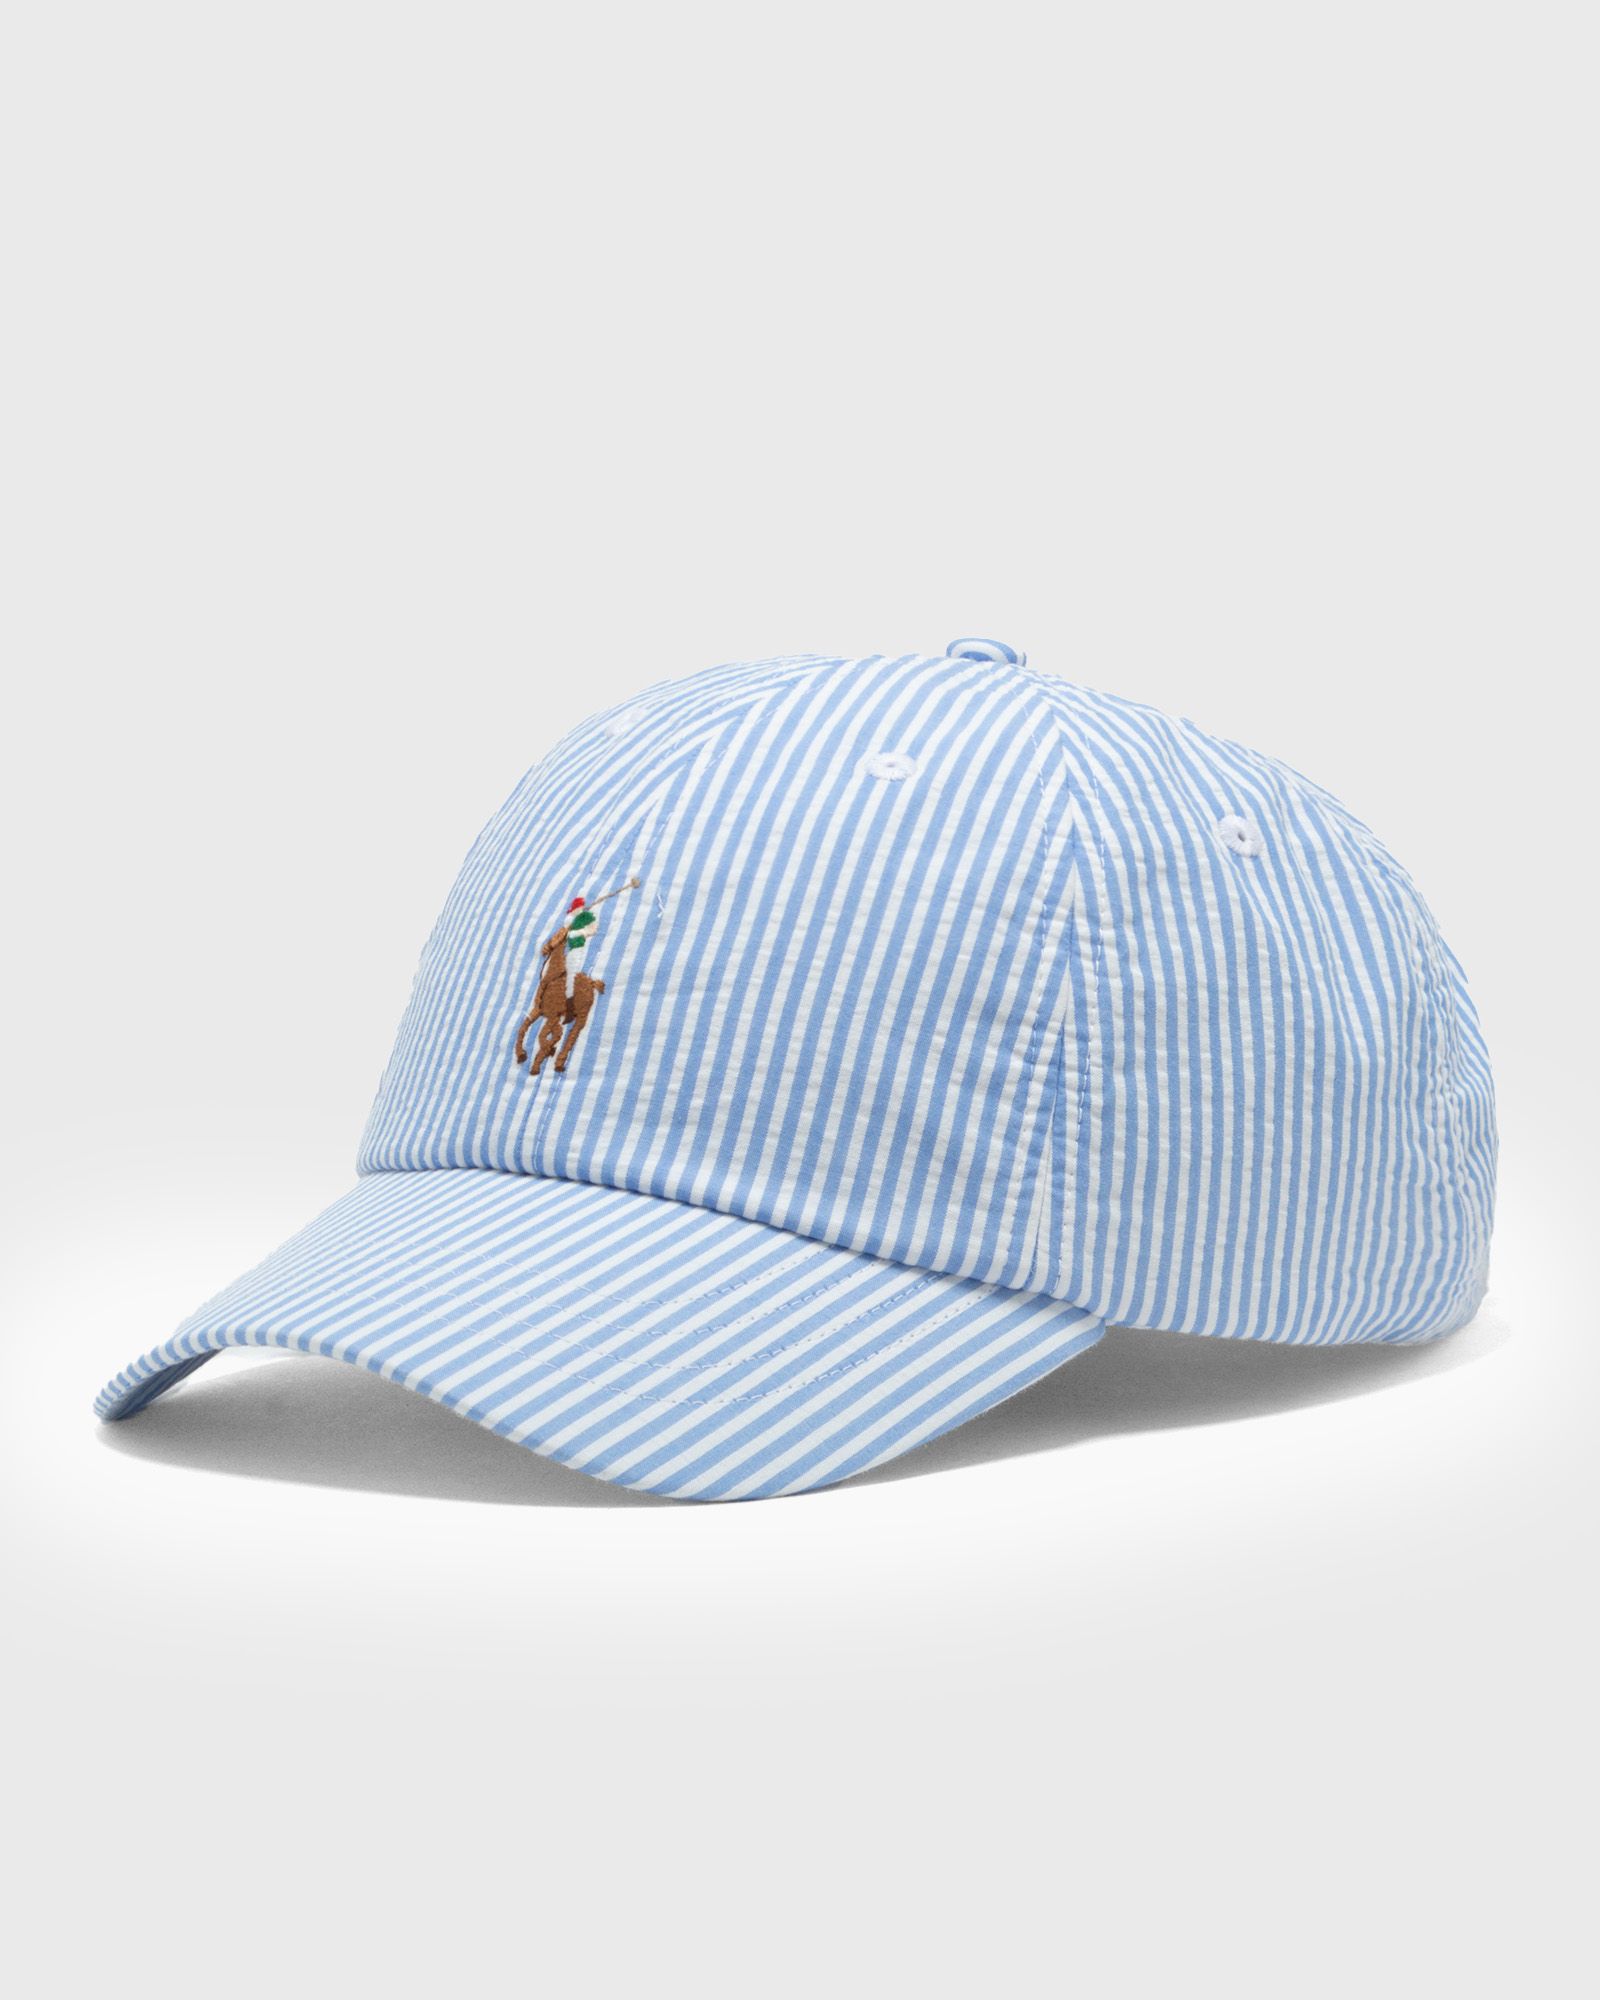 Polo Ralph Lauren - cls sprt cap-cap-hat men caps blue|white in größe:one size